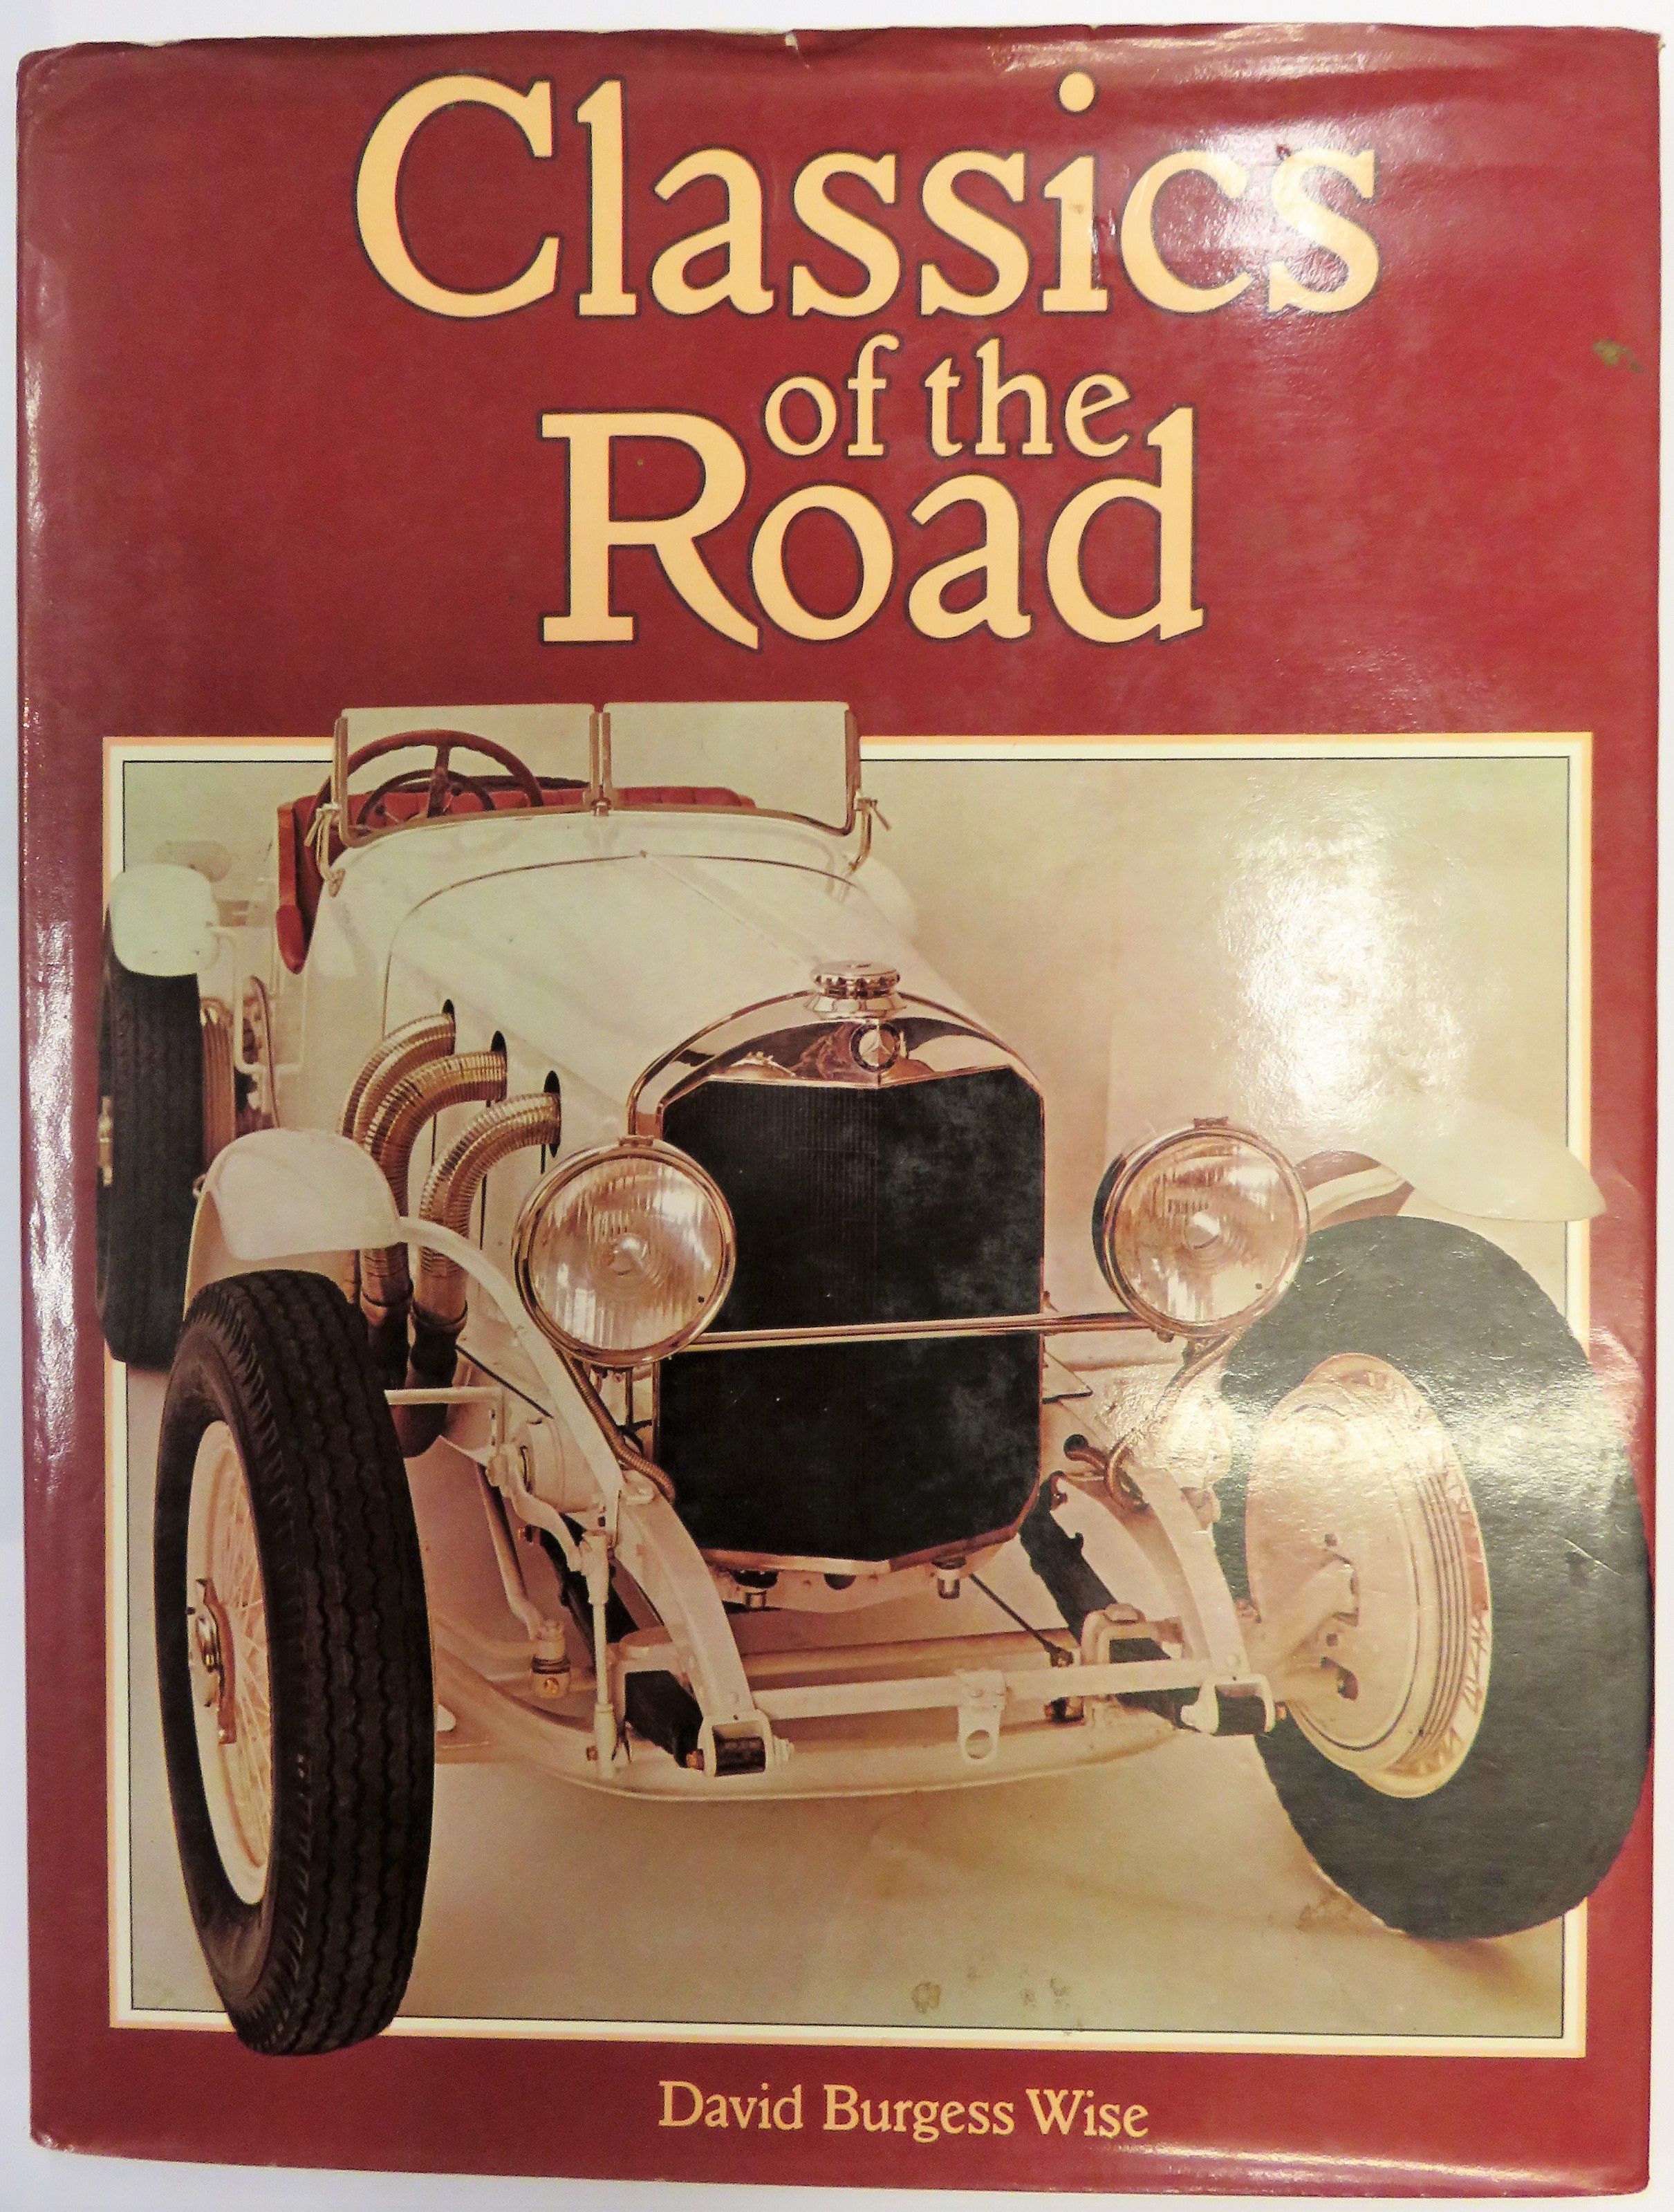 Classics of the Road